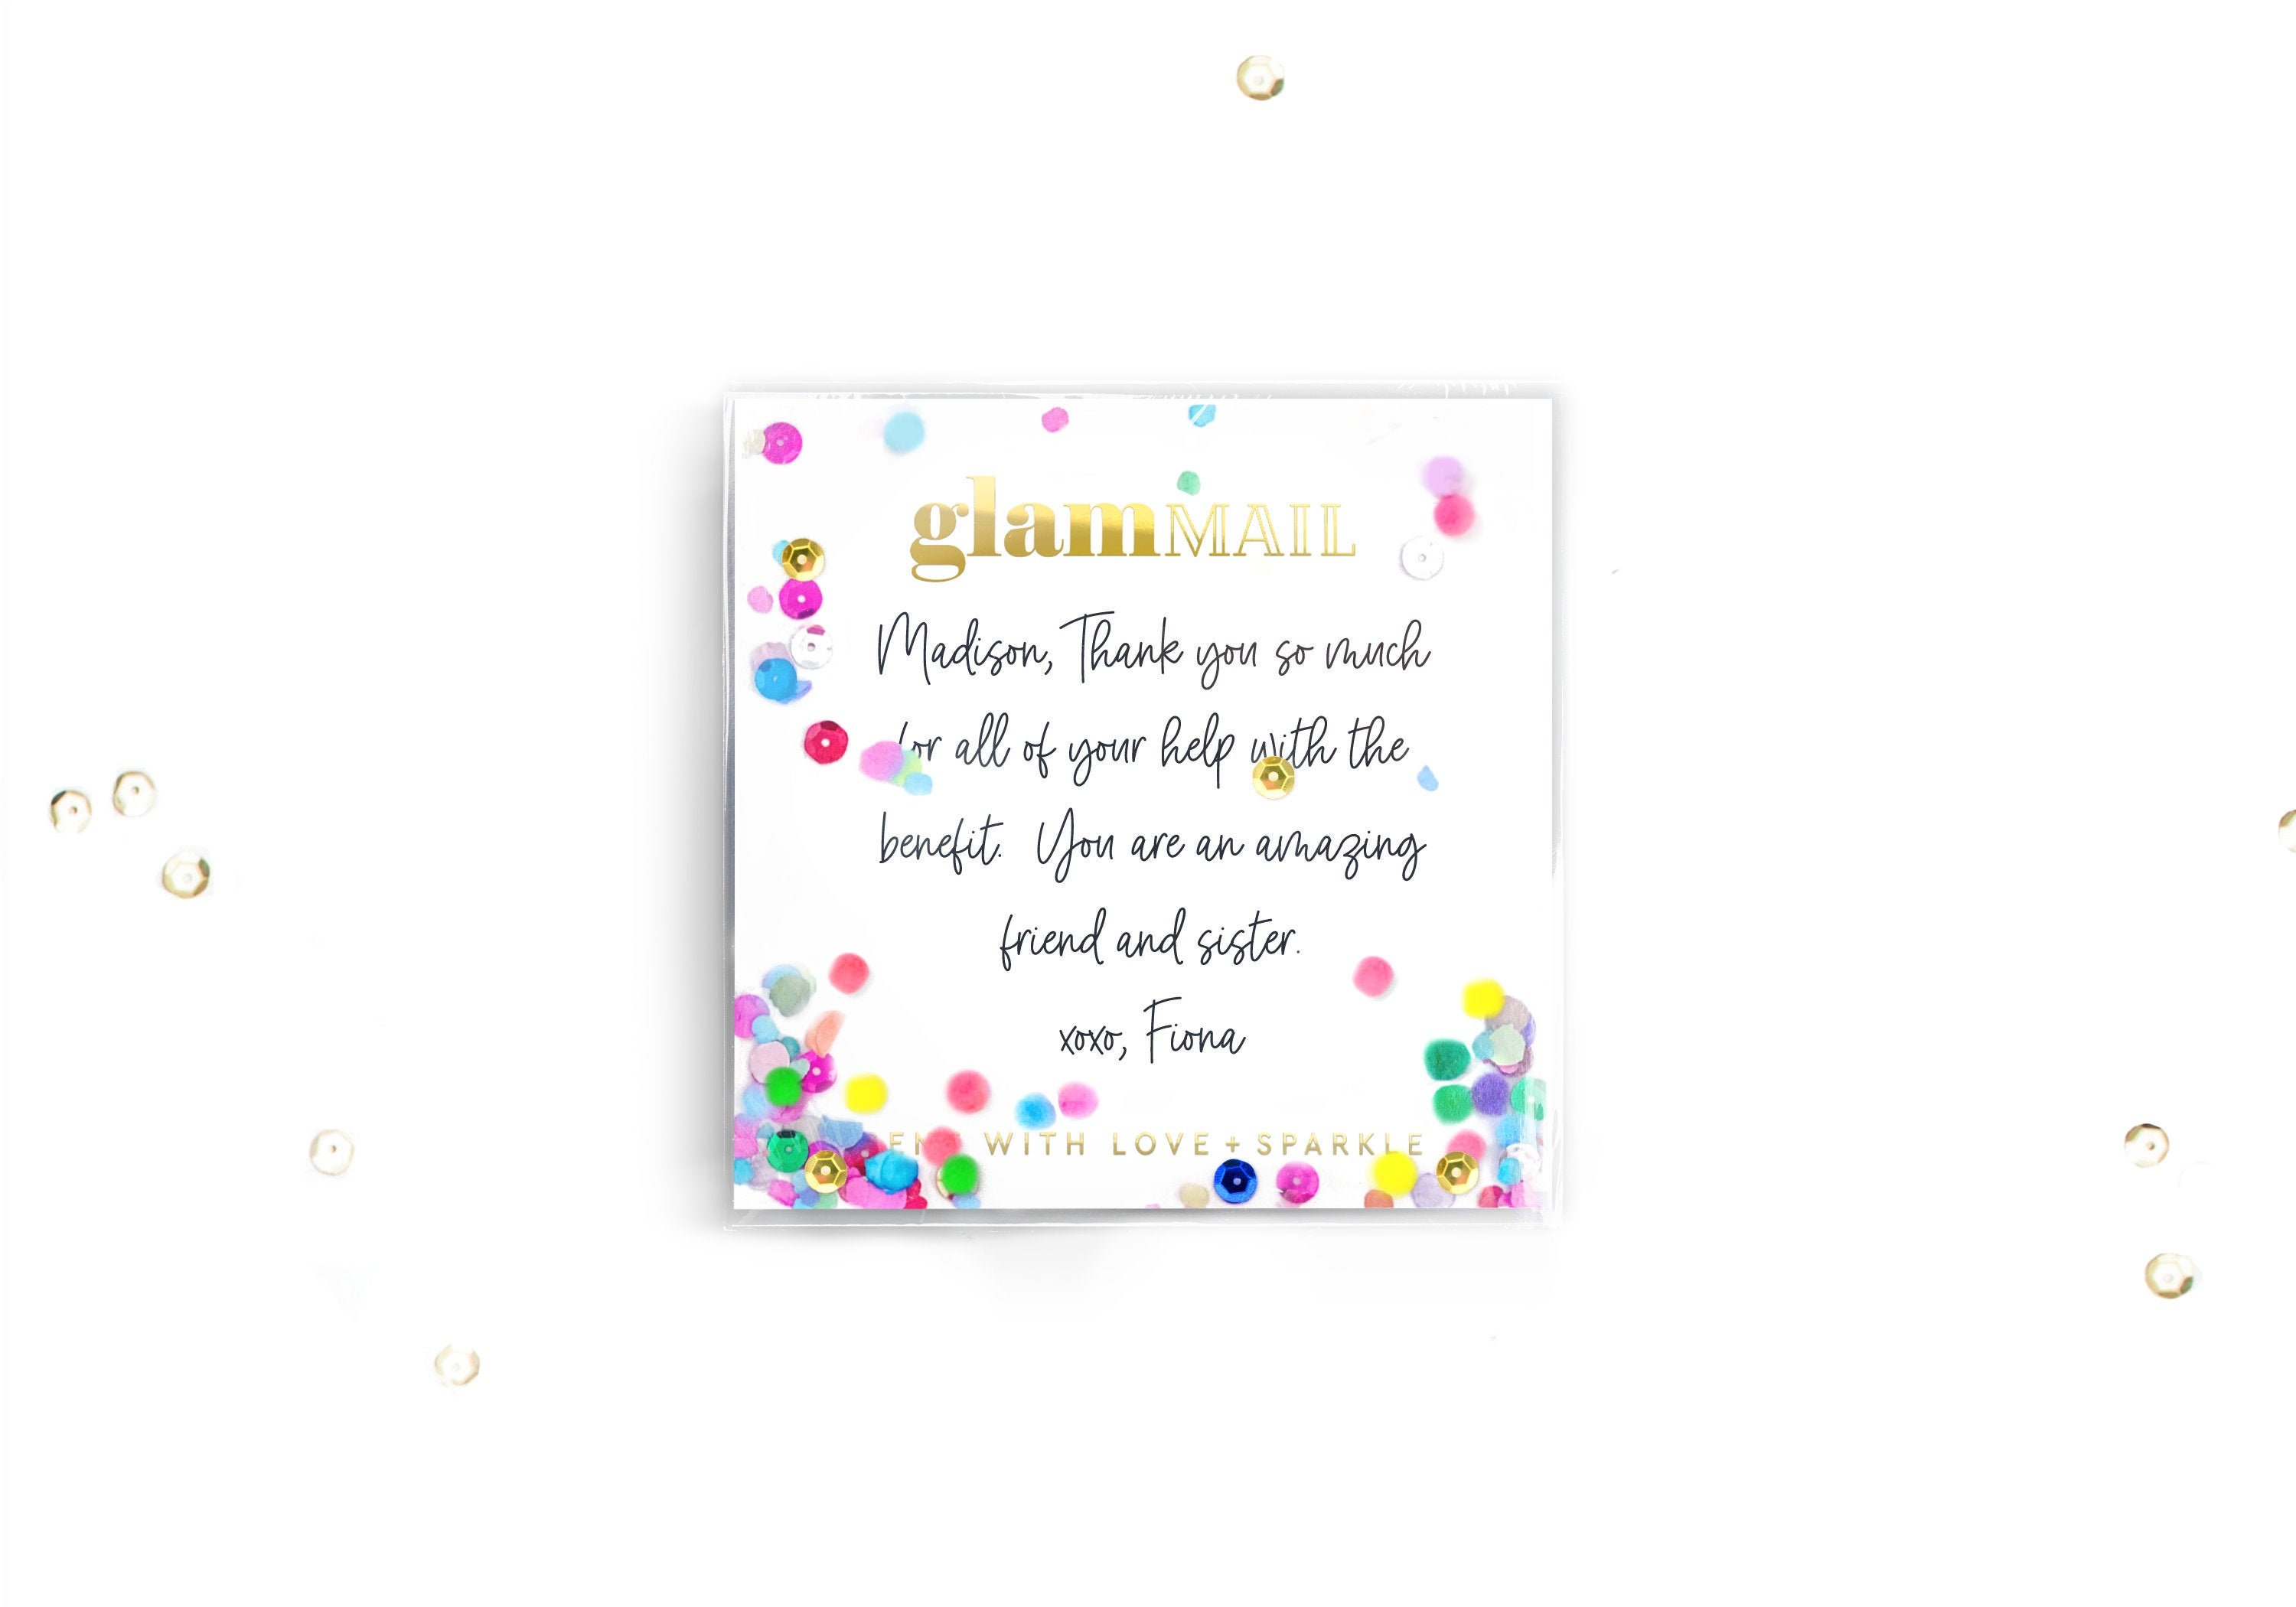  Carte cadeau  - Email - Confetti: Gift Cards